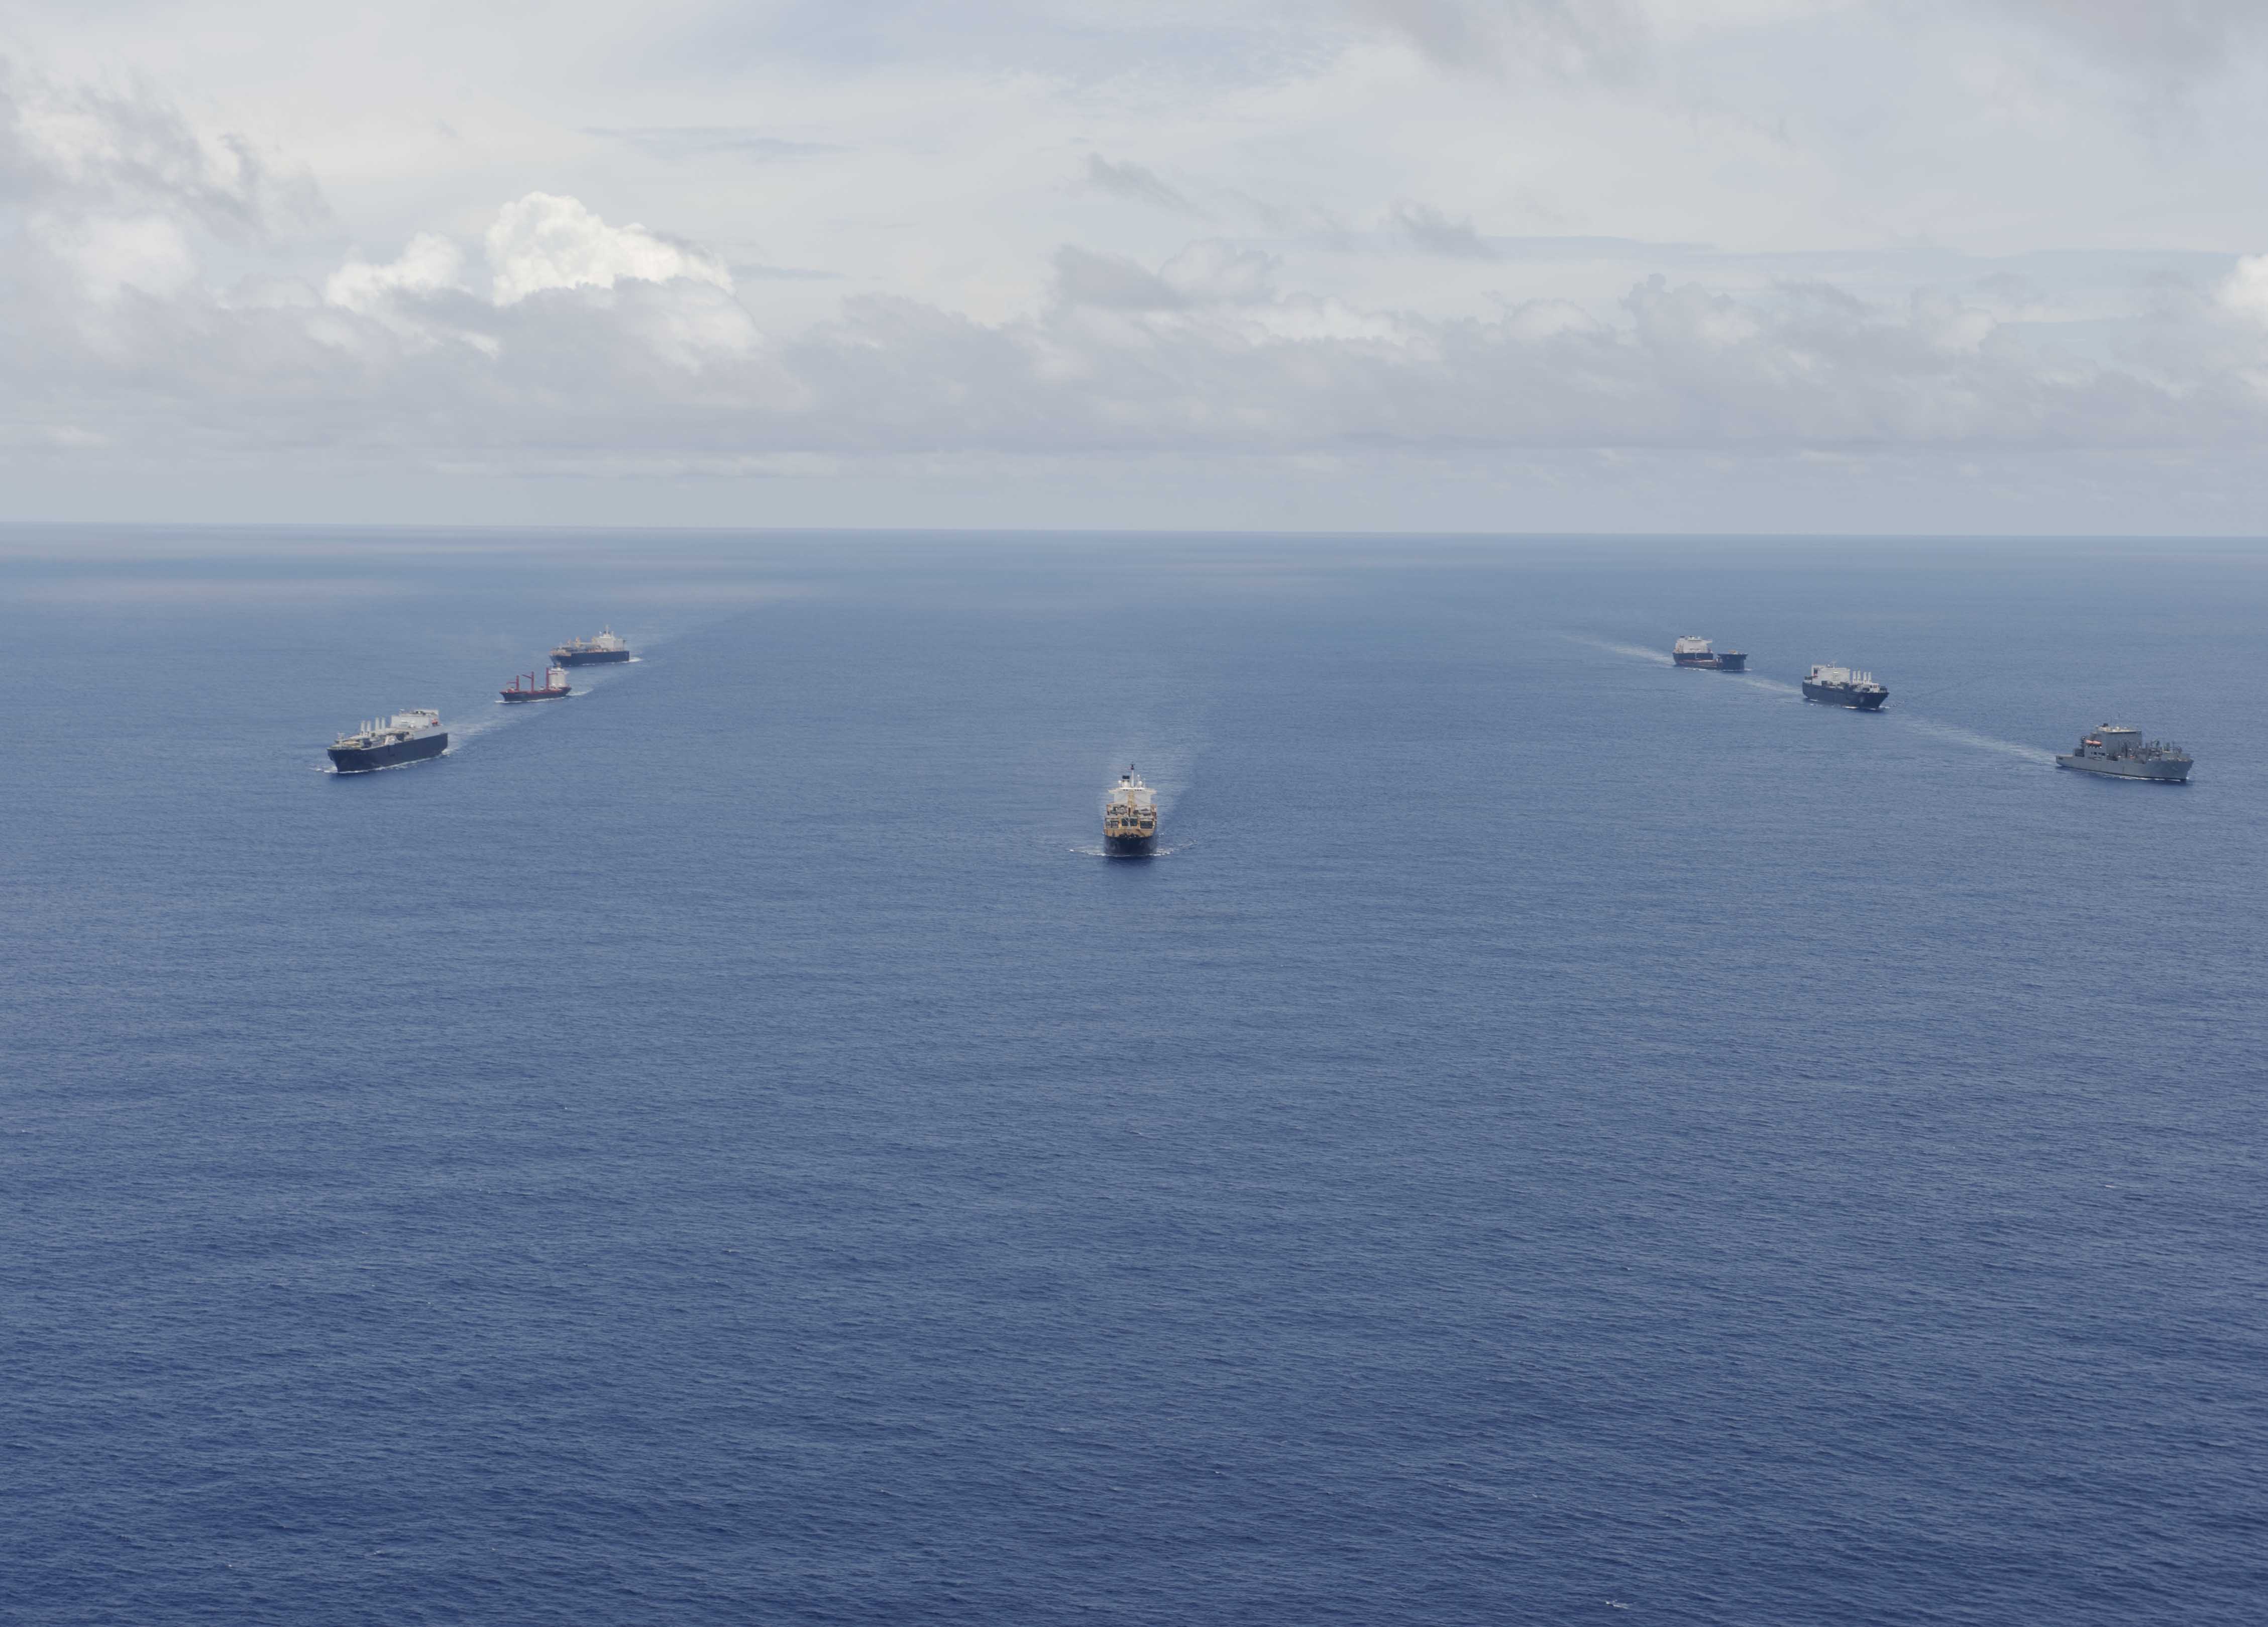 MSC ships in formation